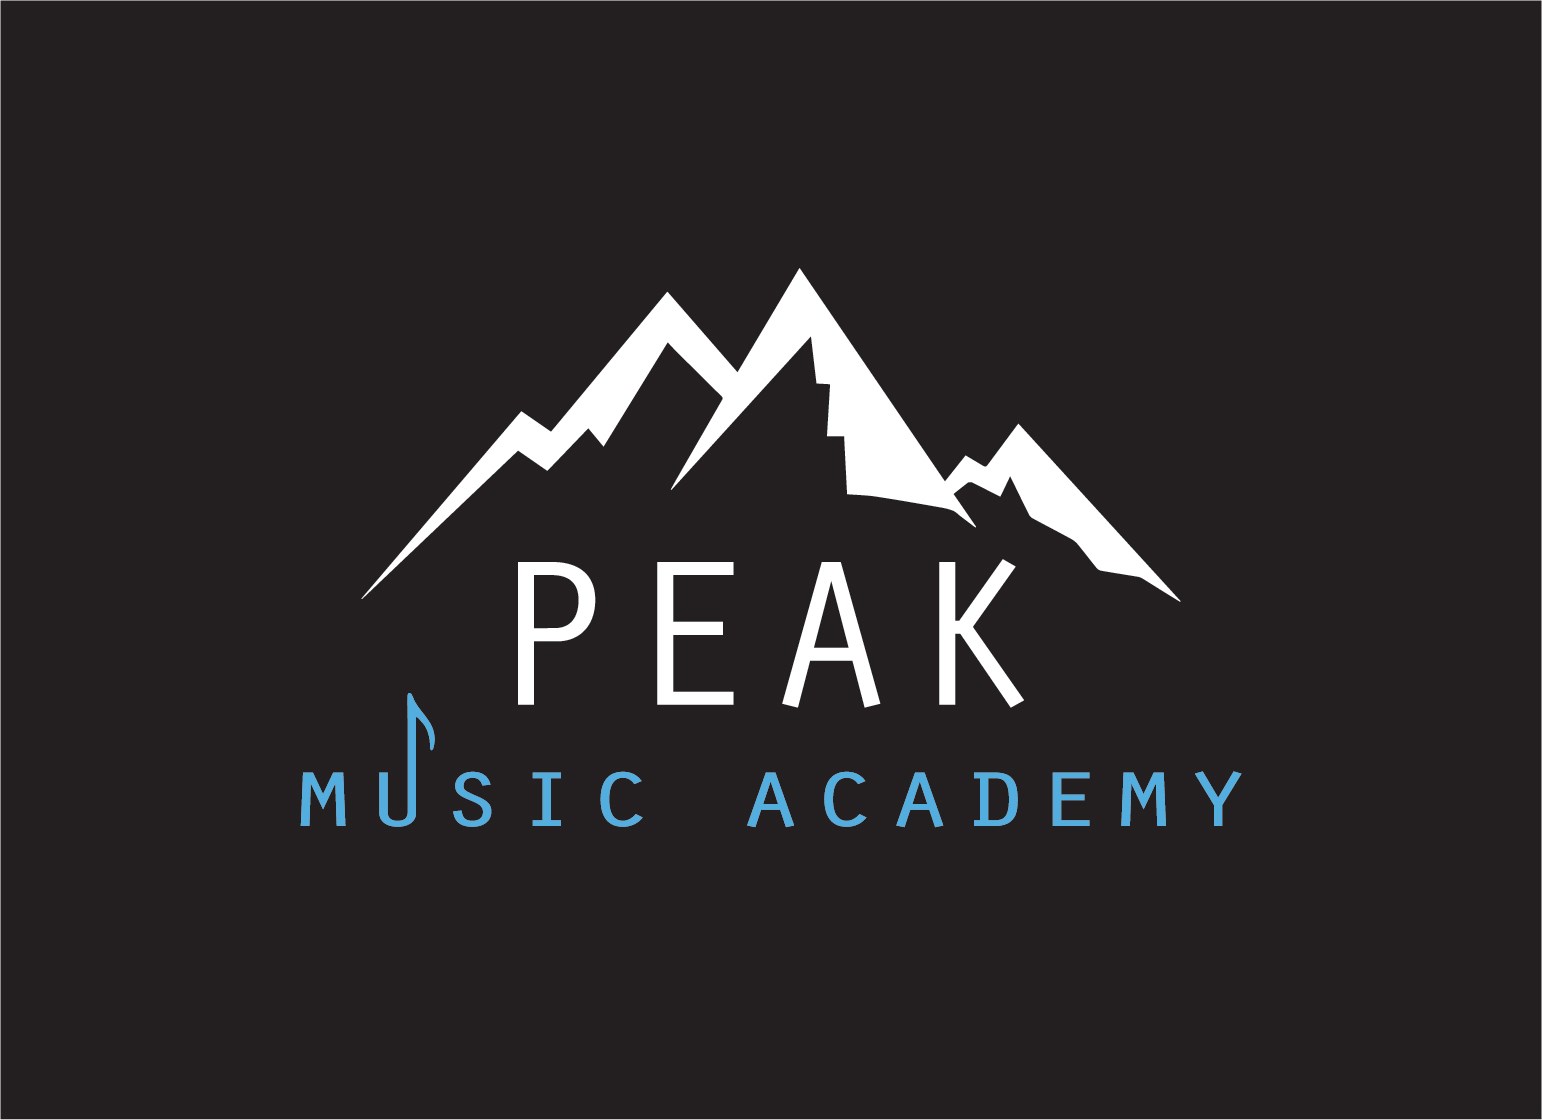 Peak Music Academy - Black Background.jpg